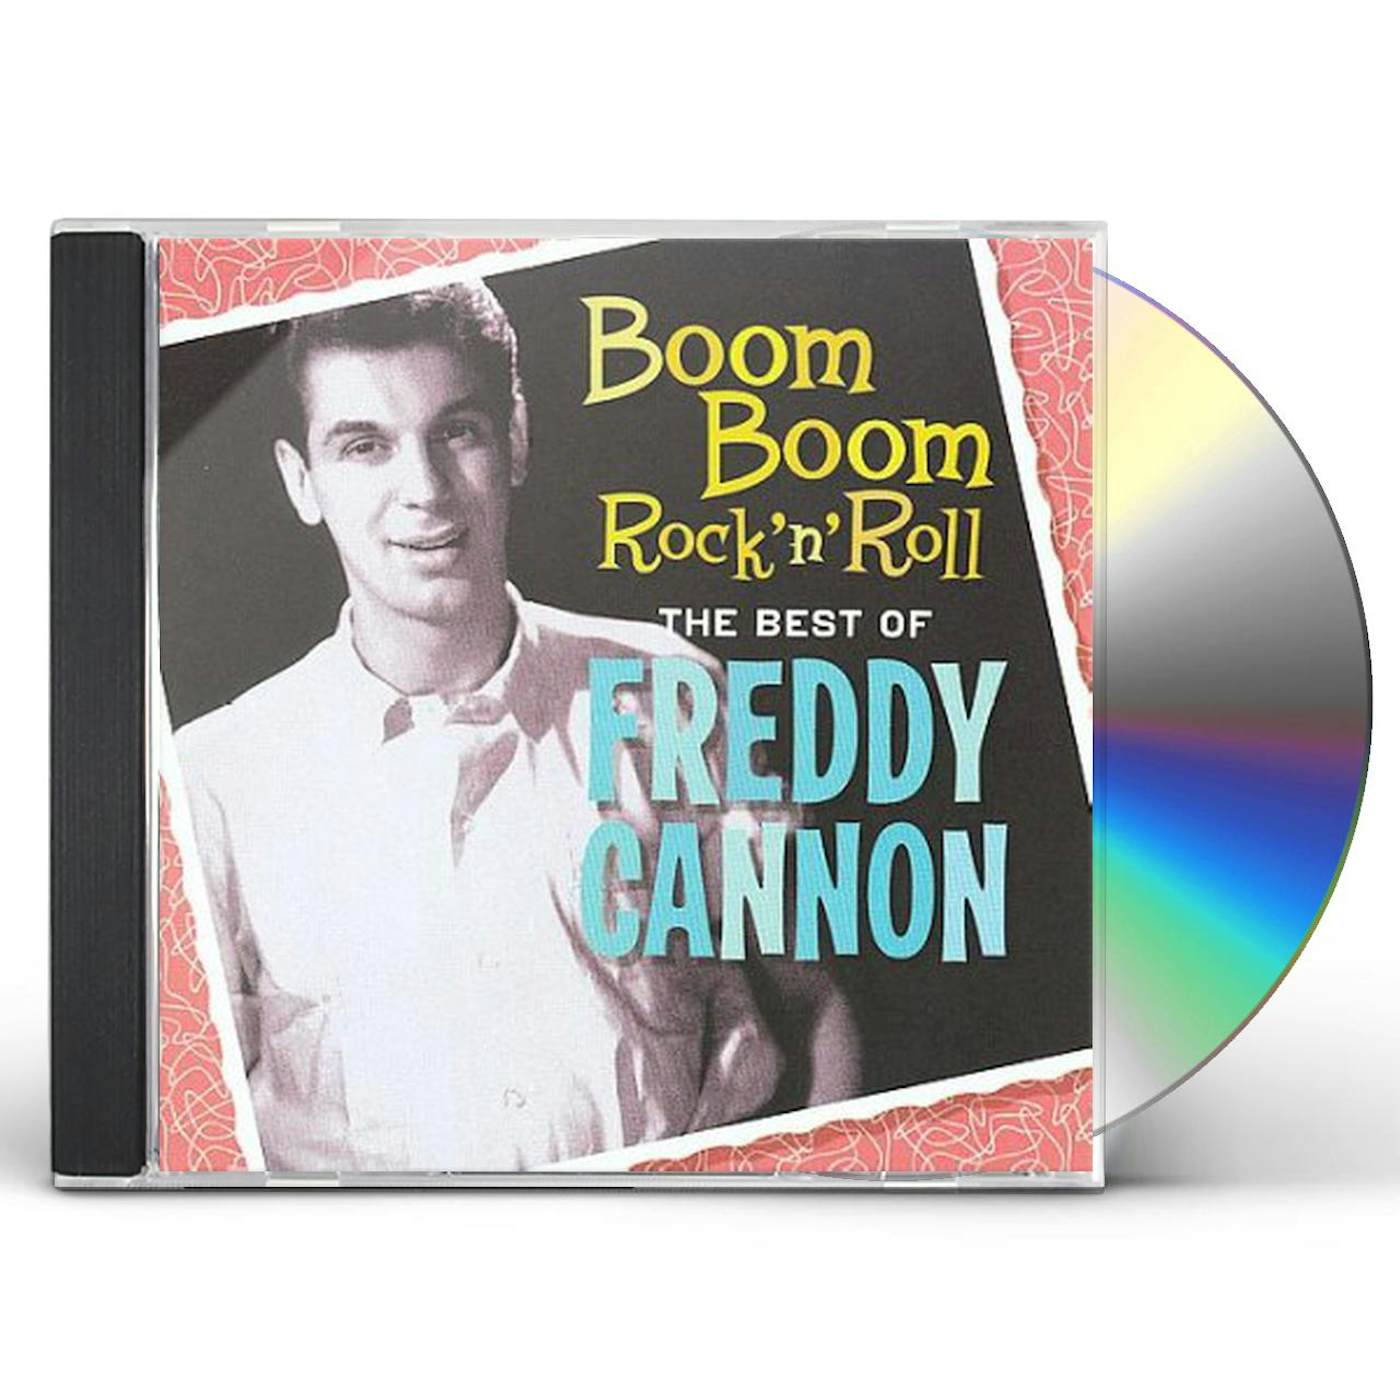 BOOM BOOM ROCK N ROLL: THE BEST OF FREDDY CANNON CD